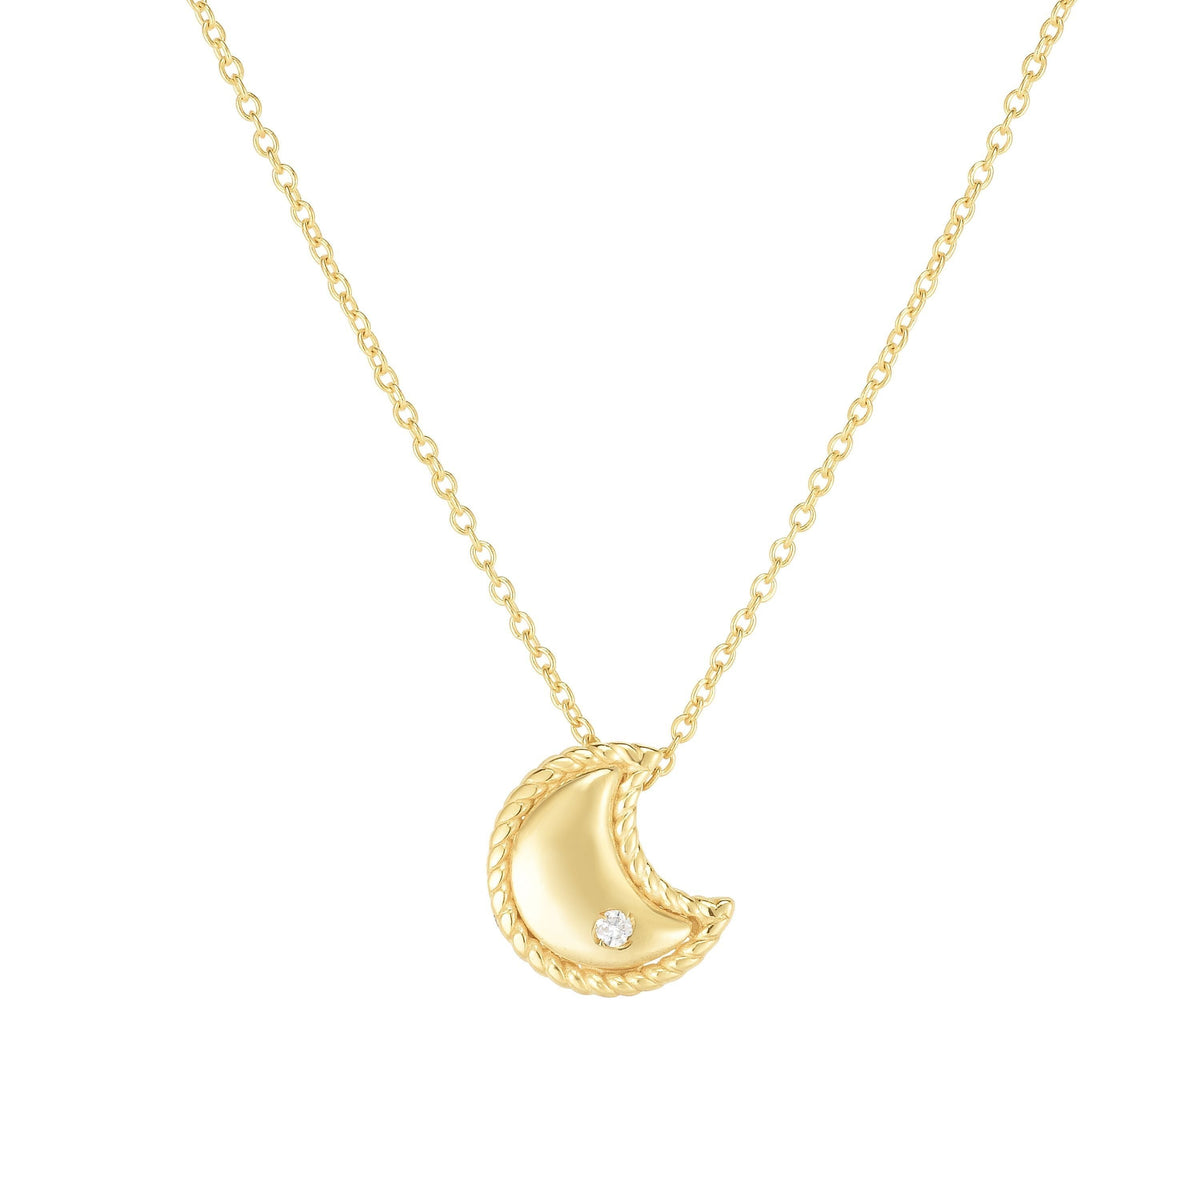 14K Yellow Gold Diamond Accent Crescent Moon Pendant Necklace